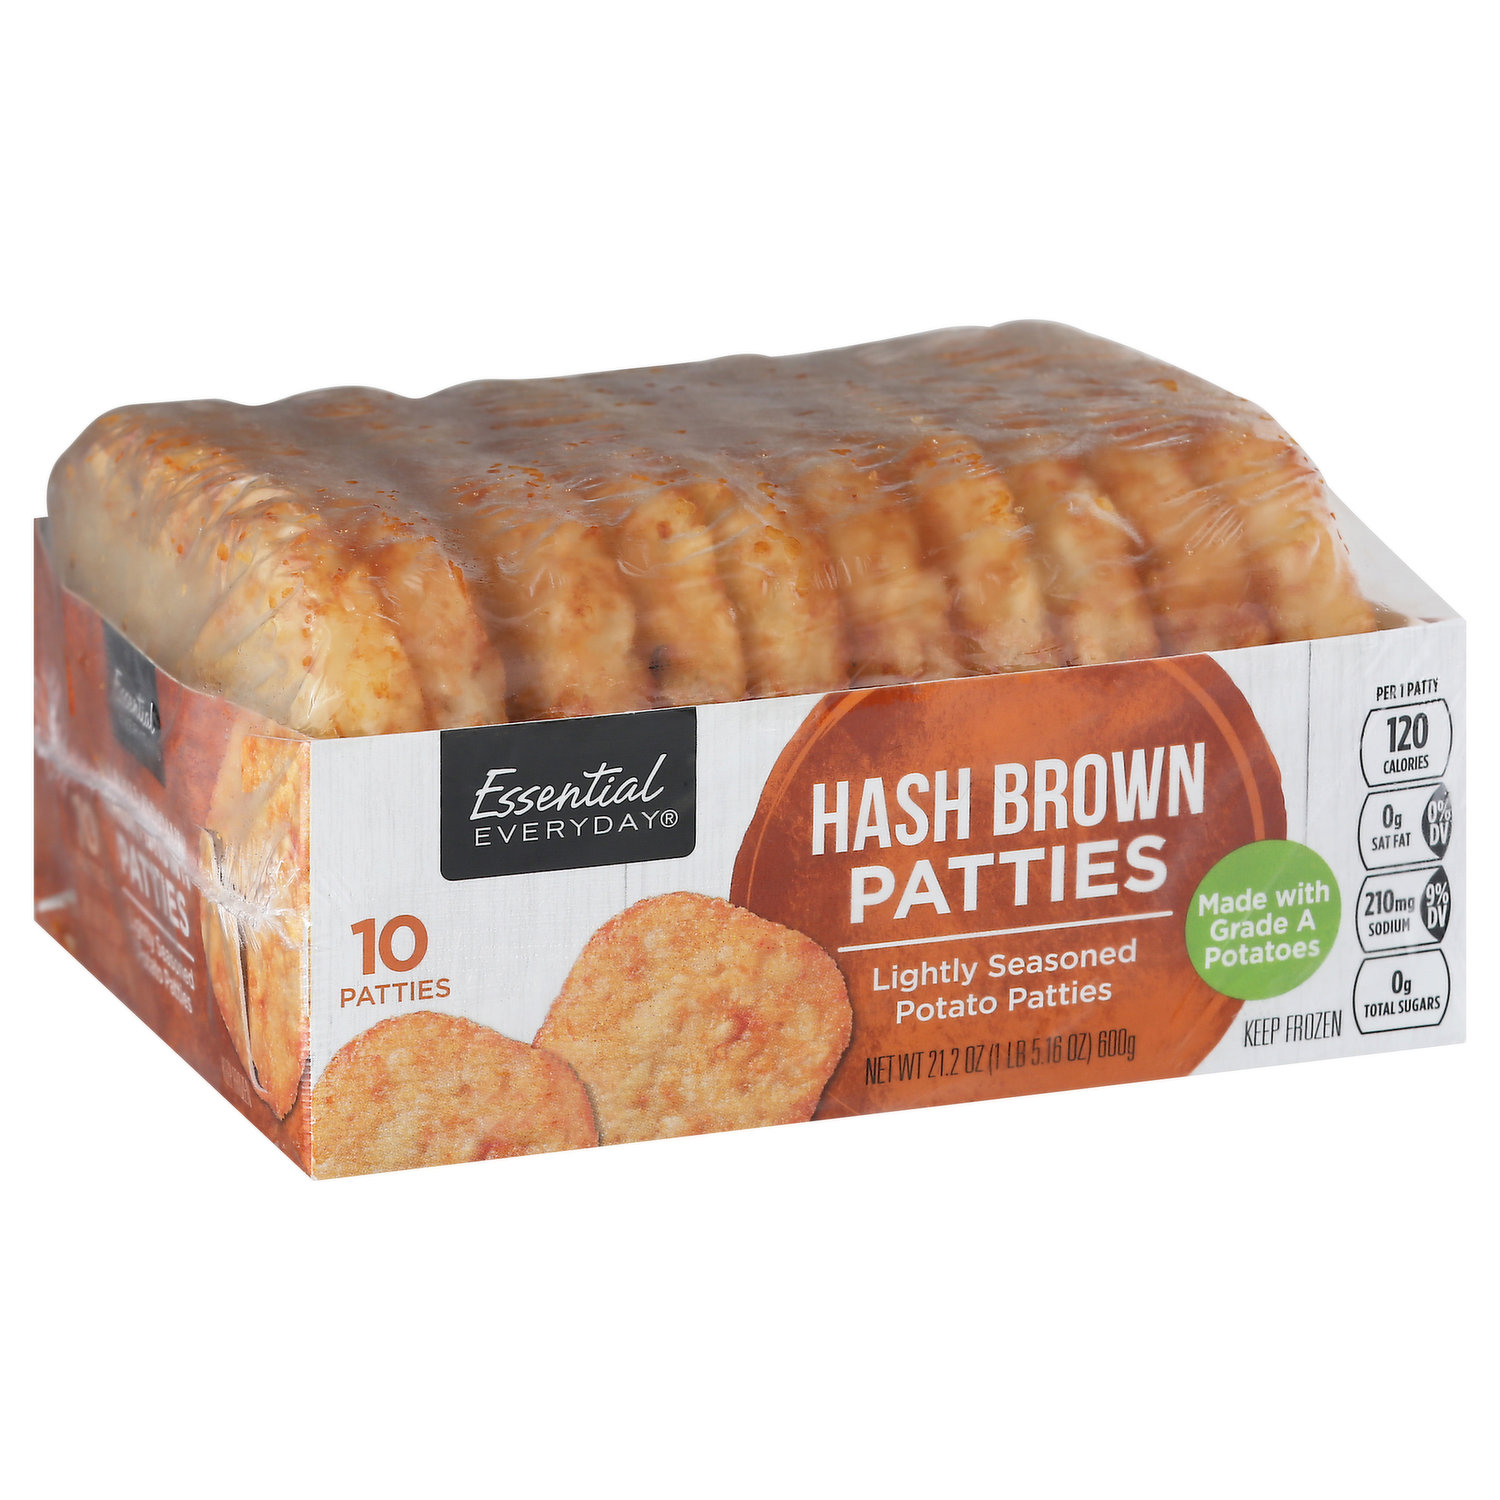 Buy Now, Original Hash Brown Patties